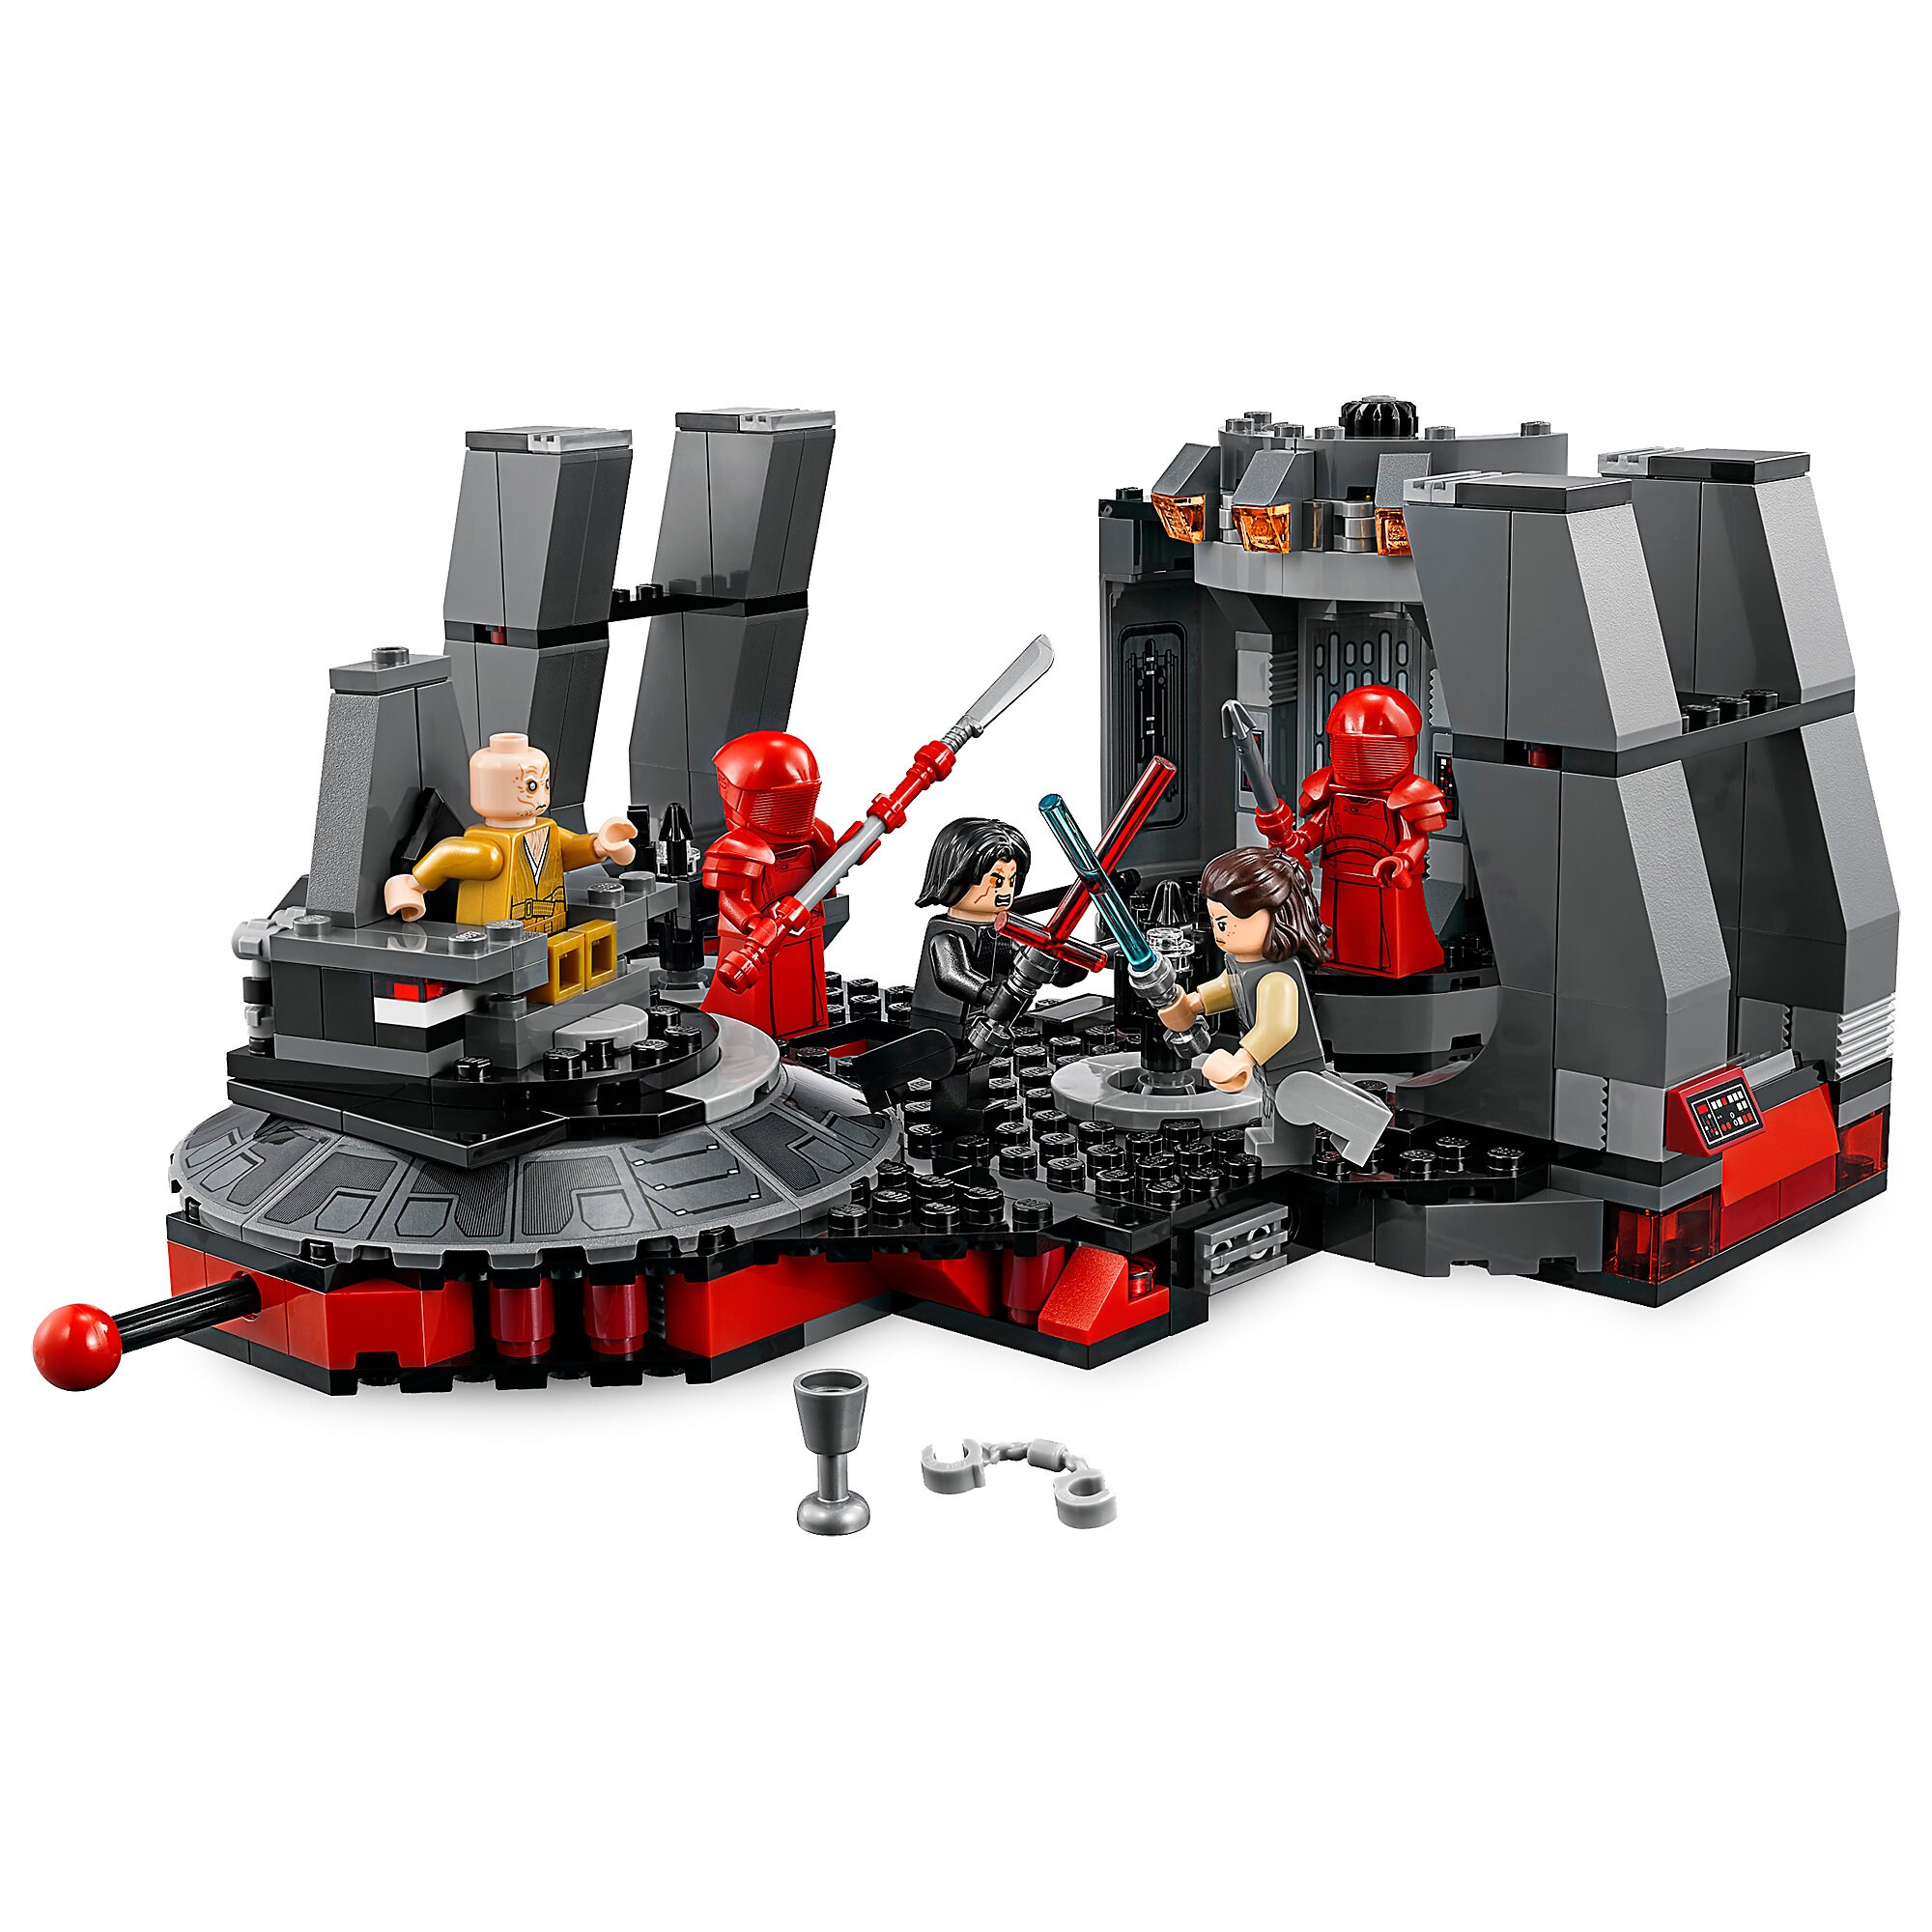 Snoke's Throne Room Playset by LEGO - Star Wars: The Last Jedi